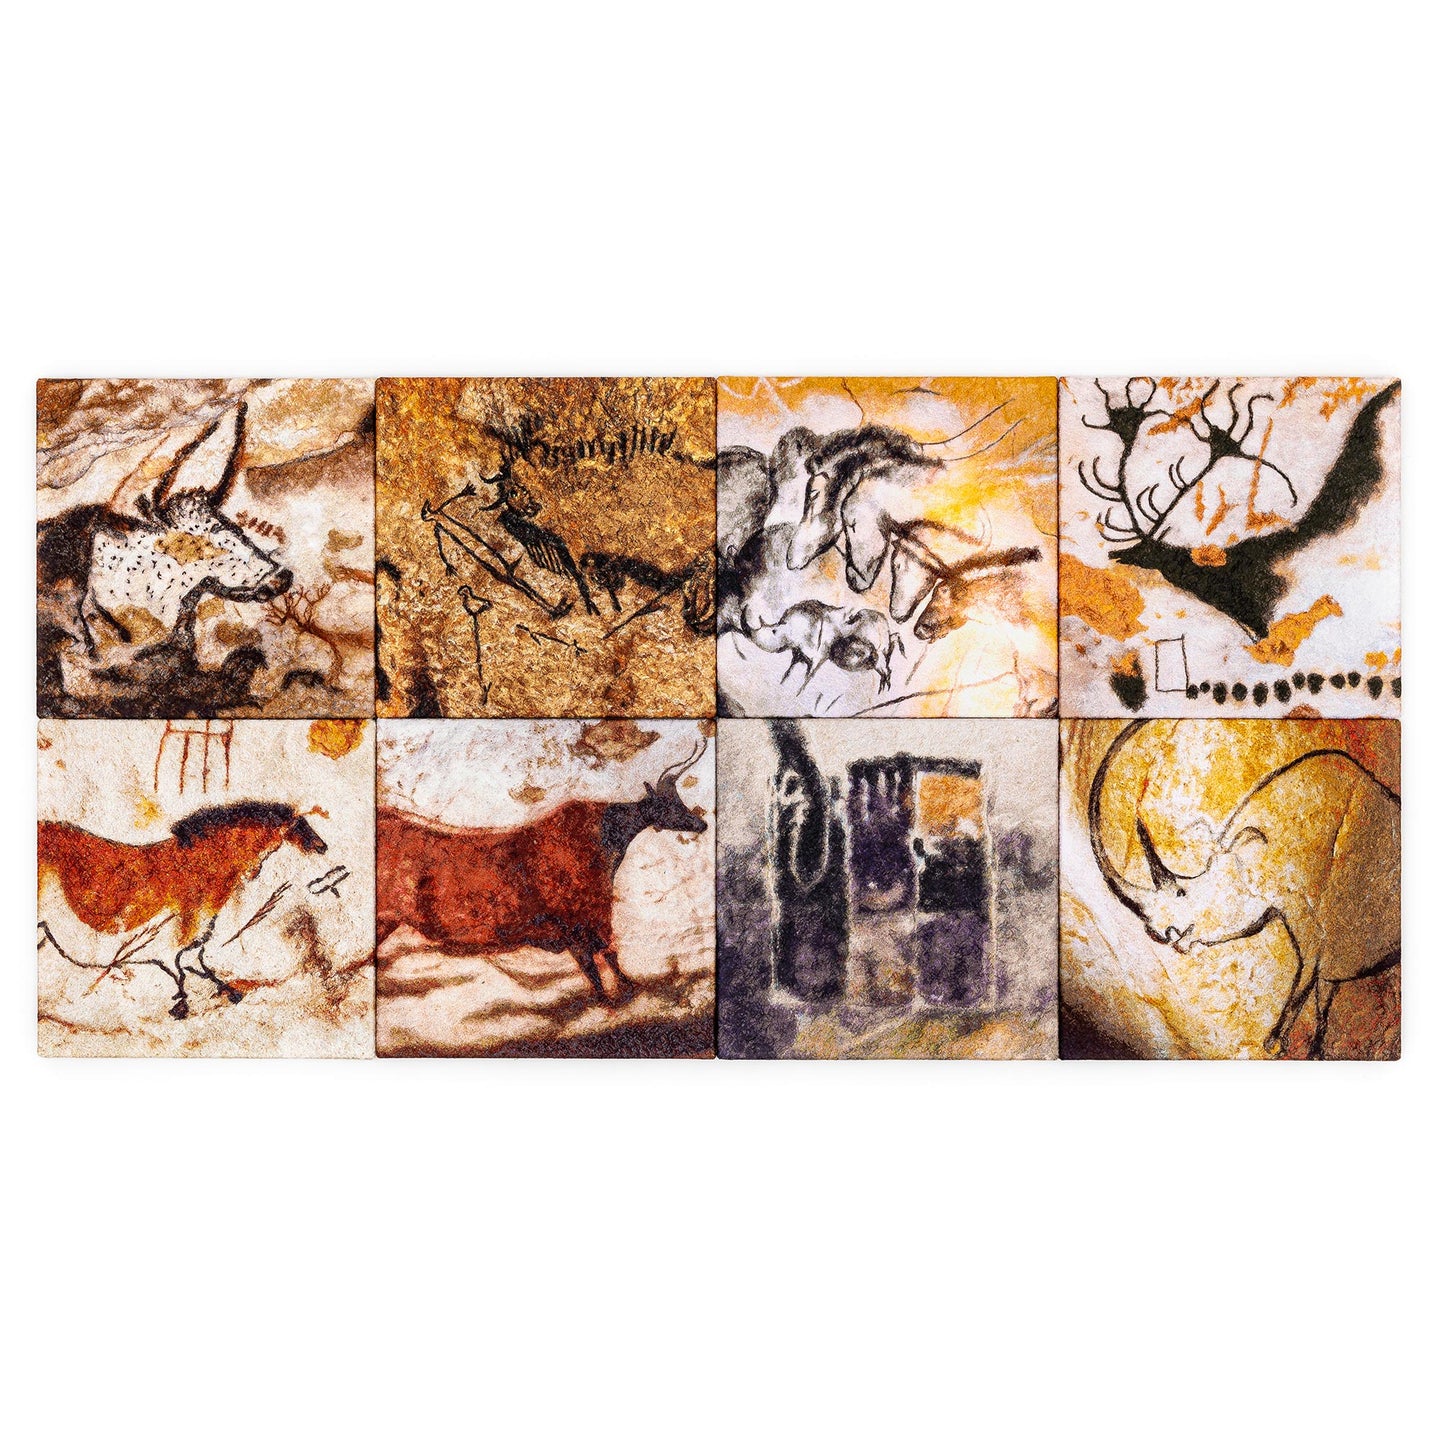 Lascaux-Chauvet – Set of 8 embroidered canvases